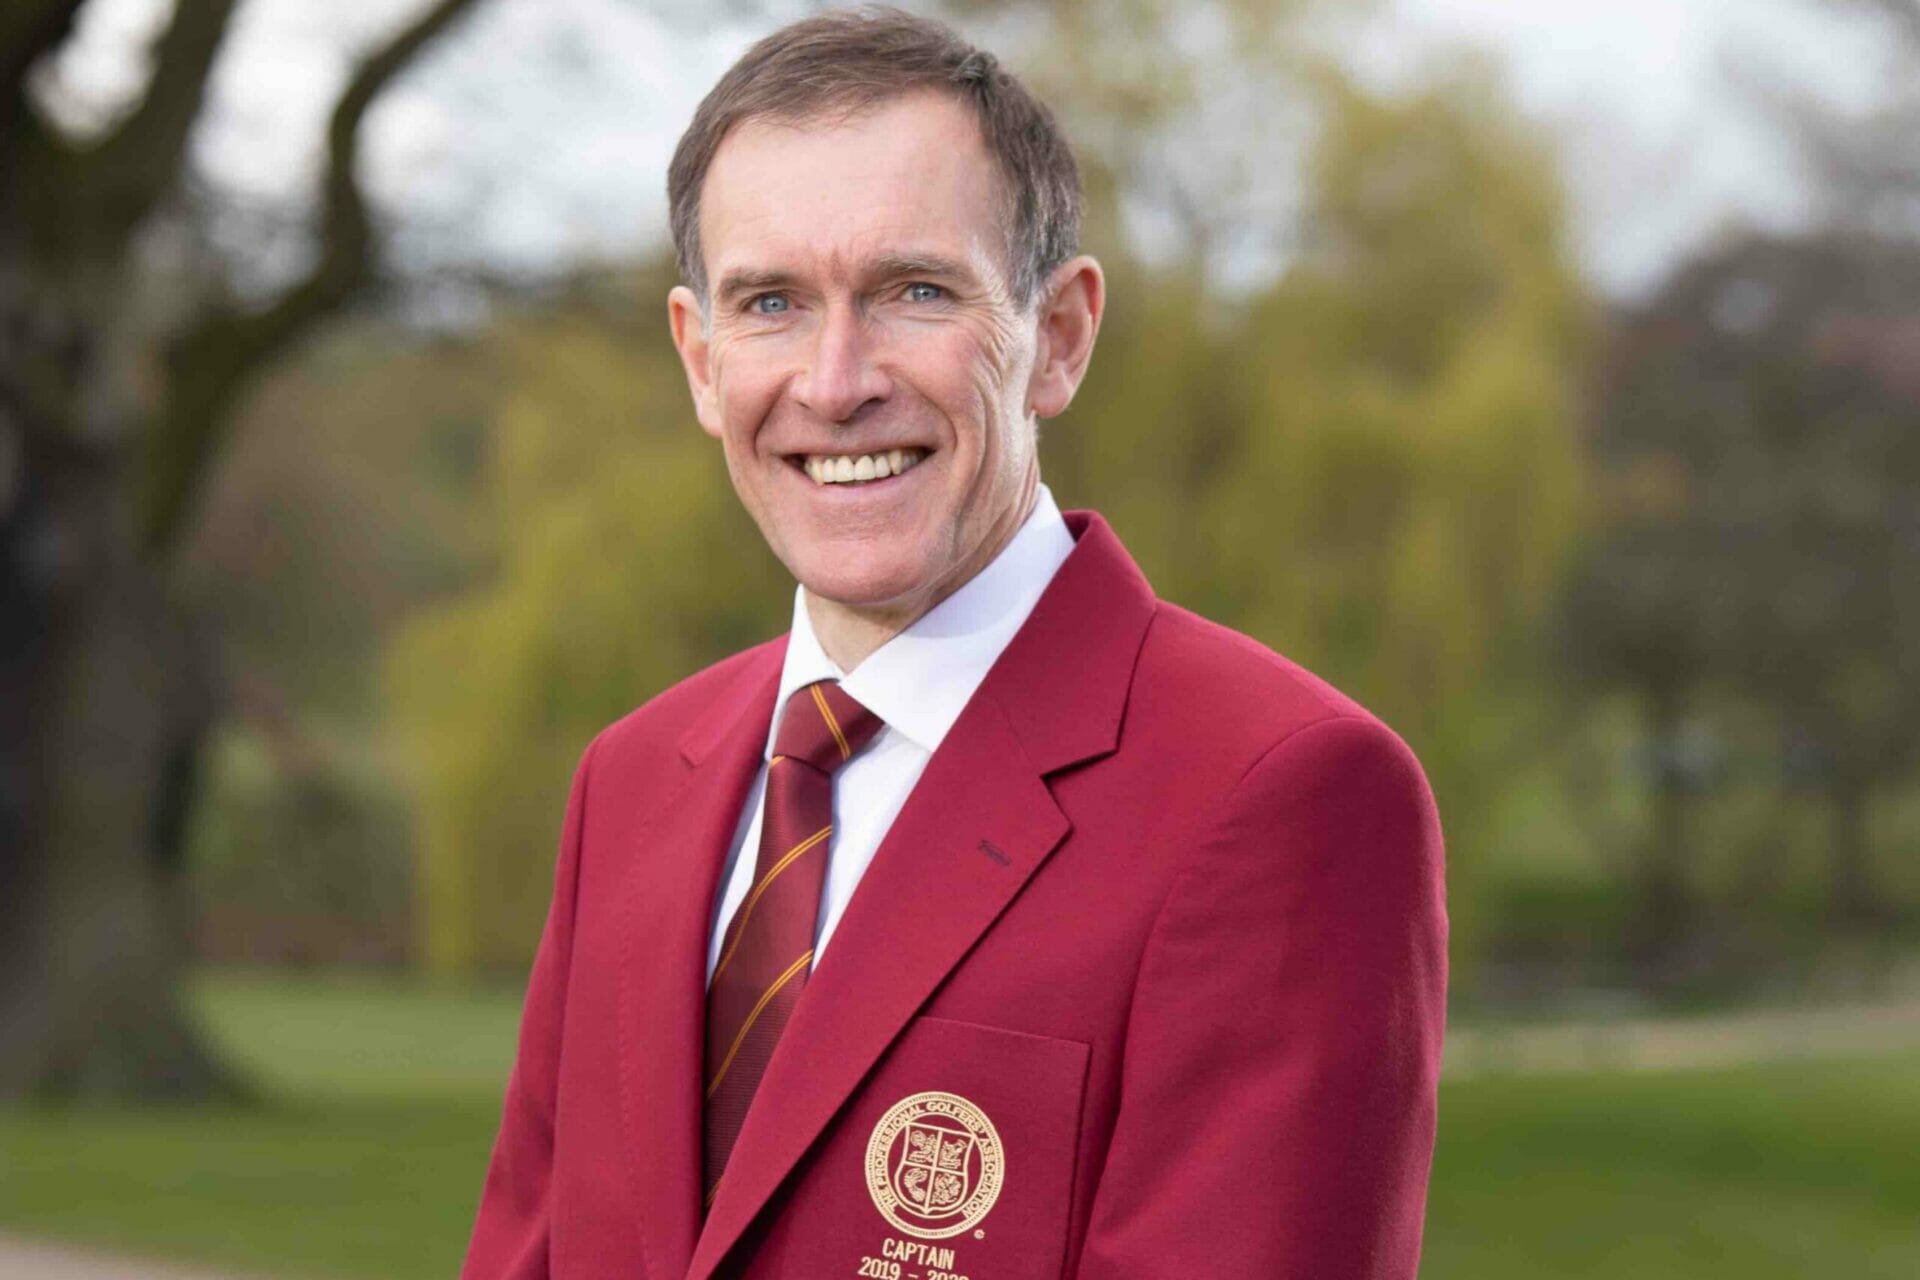 Lurgan’s Peter Hanna takes up role as PGA Captain